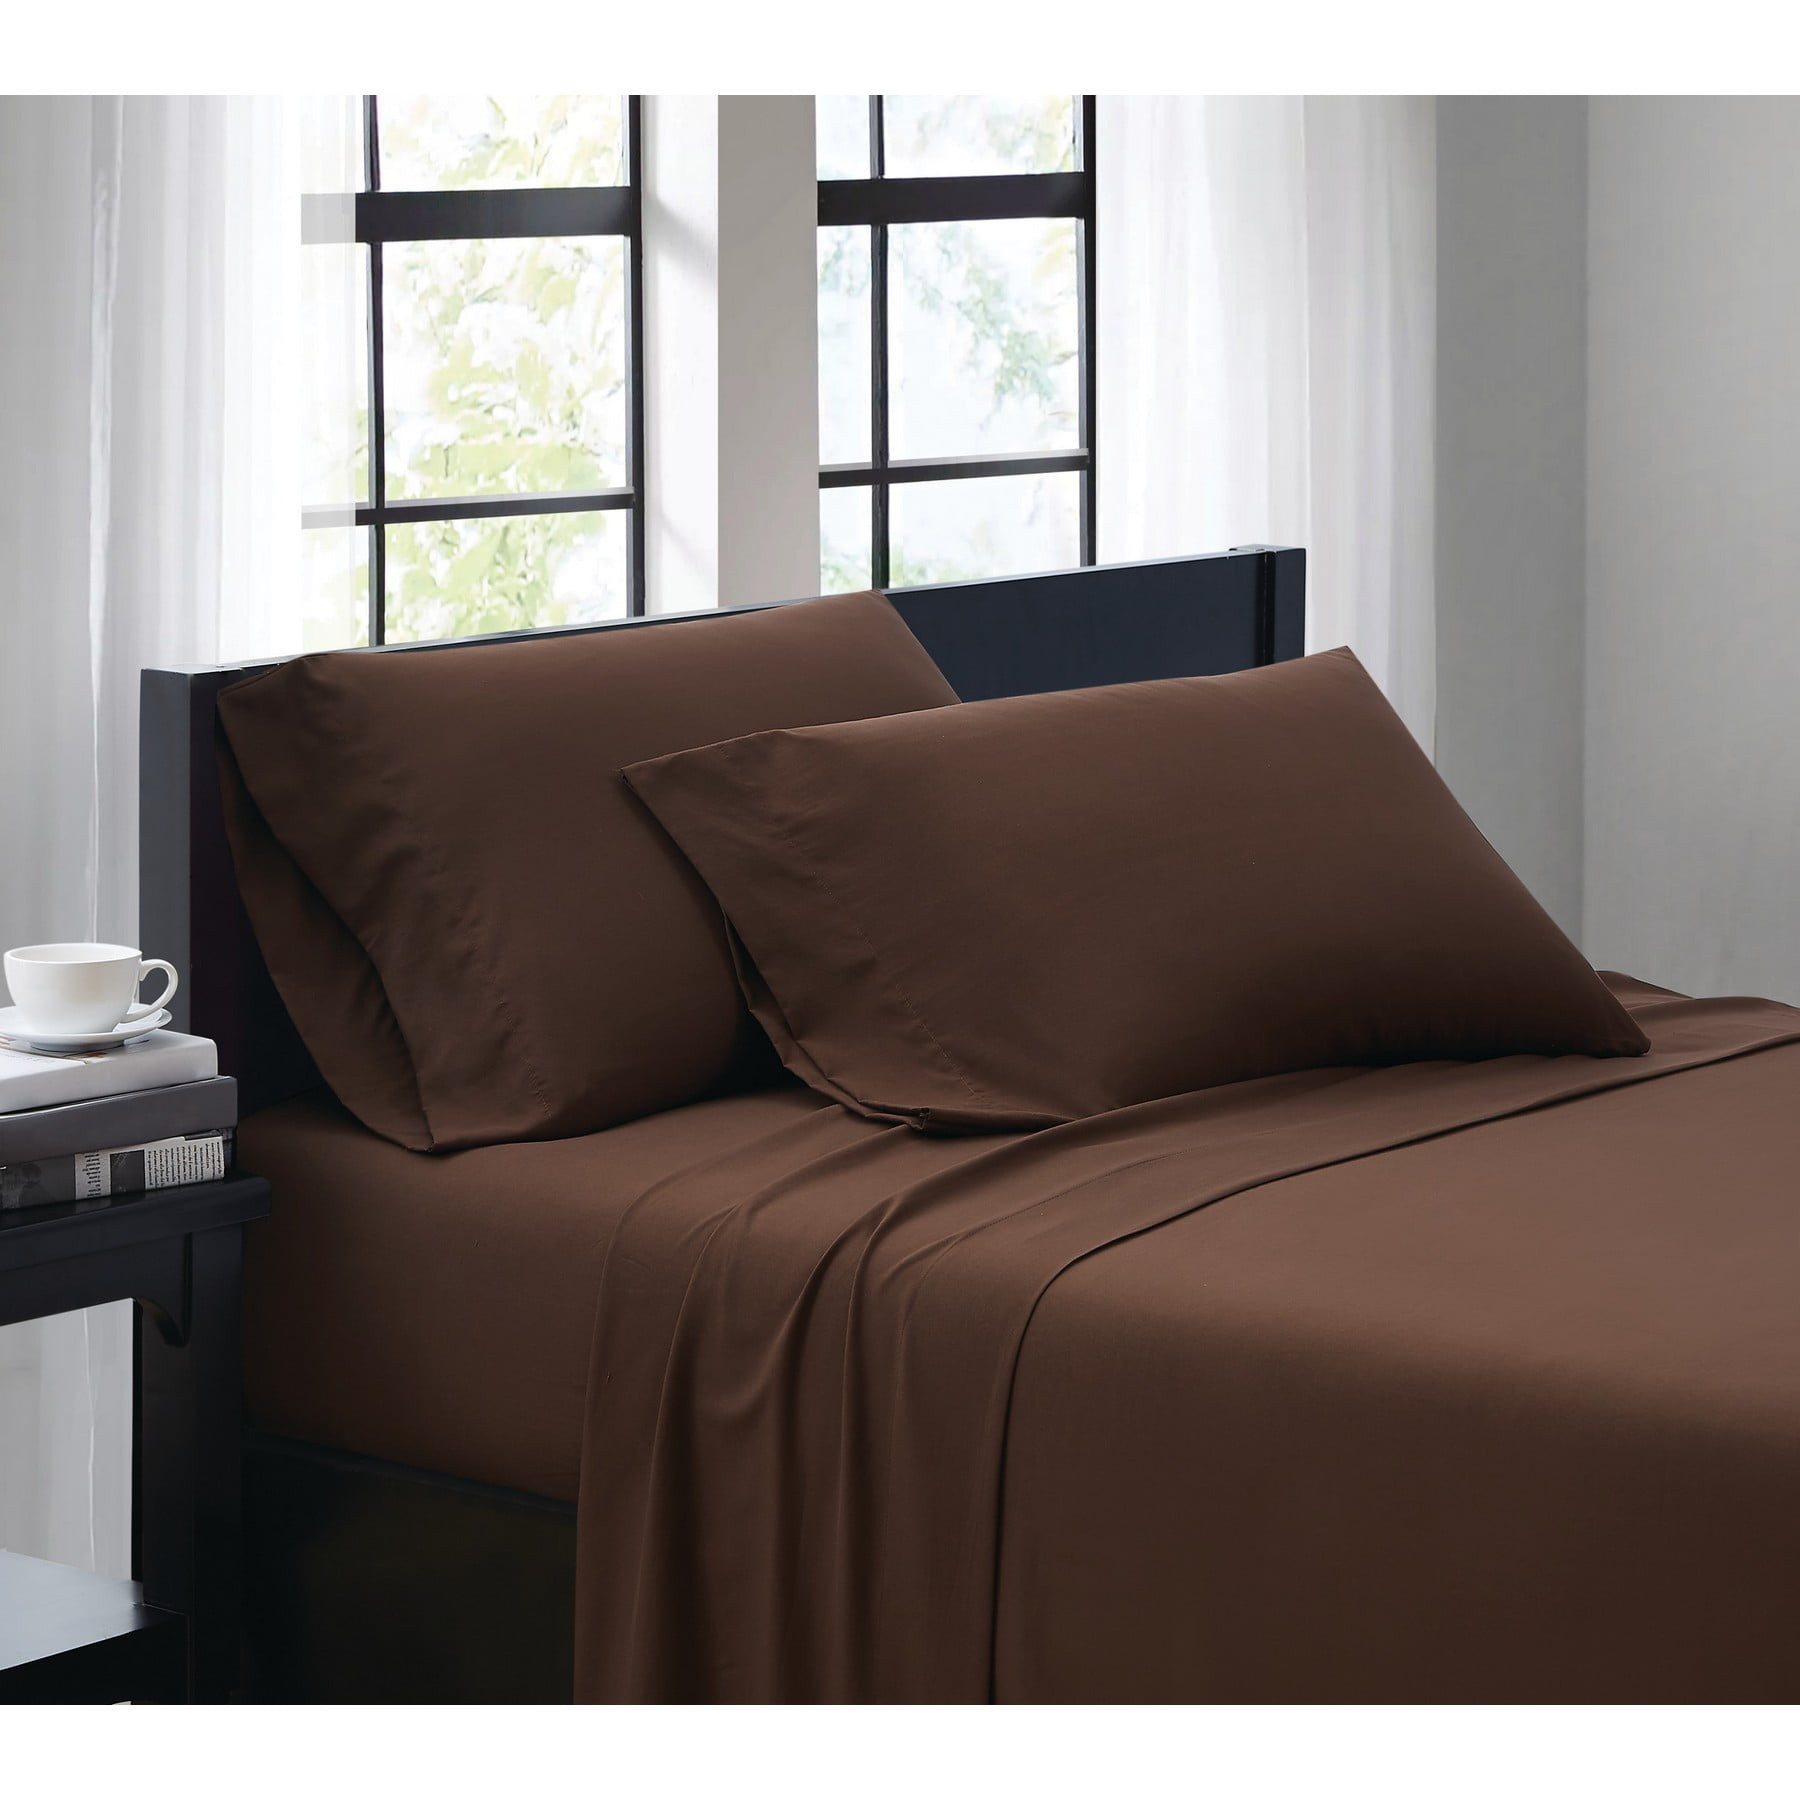 Queen Brown 100% Ultra Soft Microfiber Easy Care Luxury Bedroom Sheet Set 